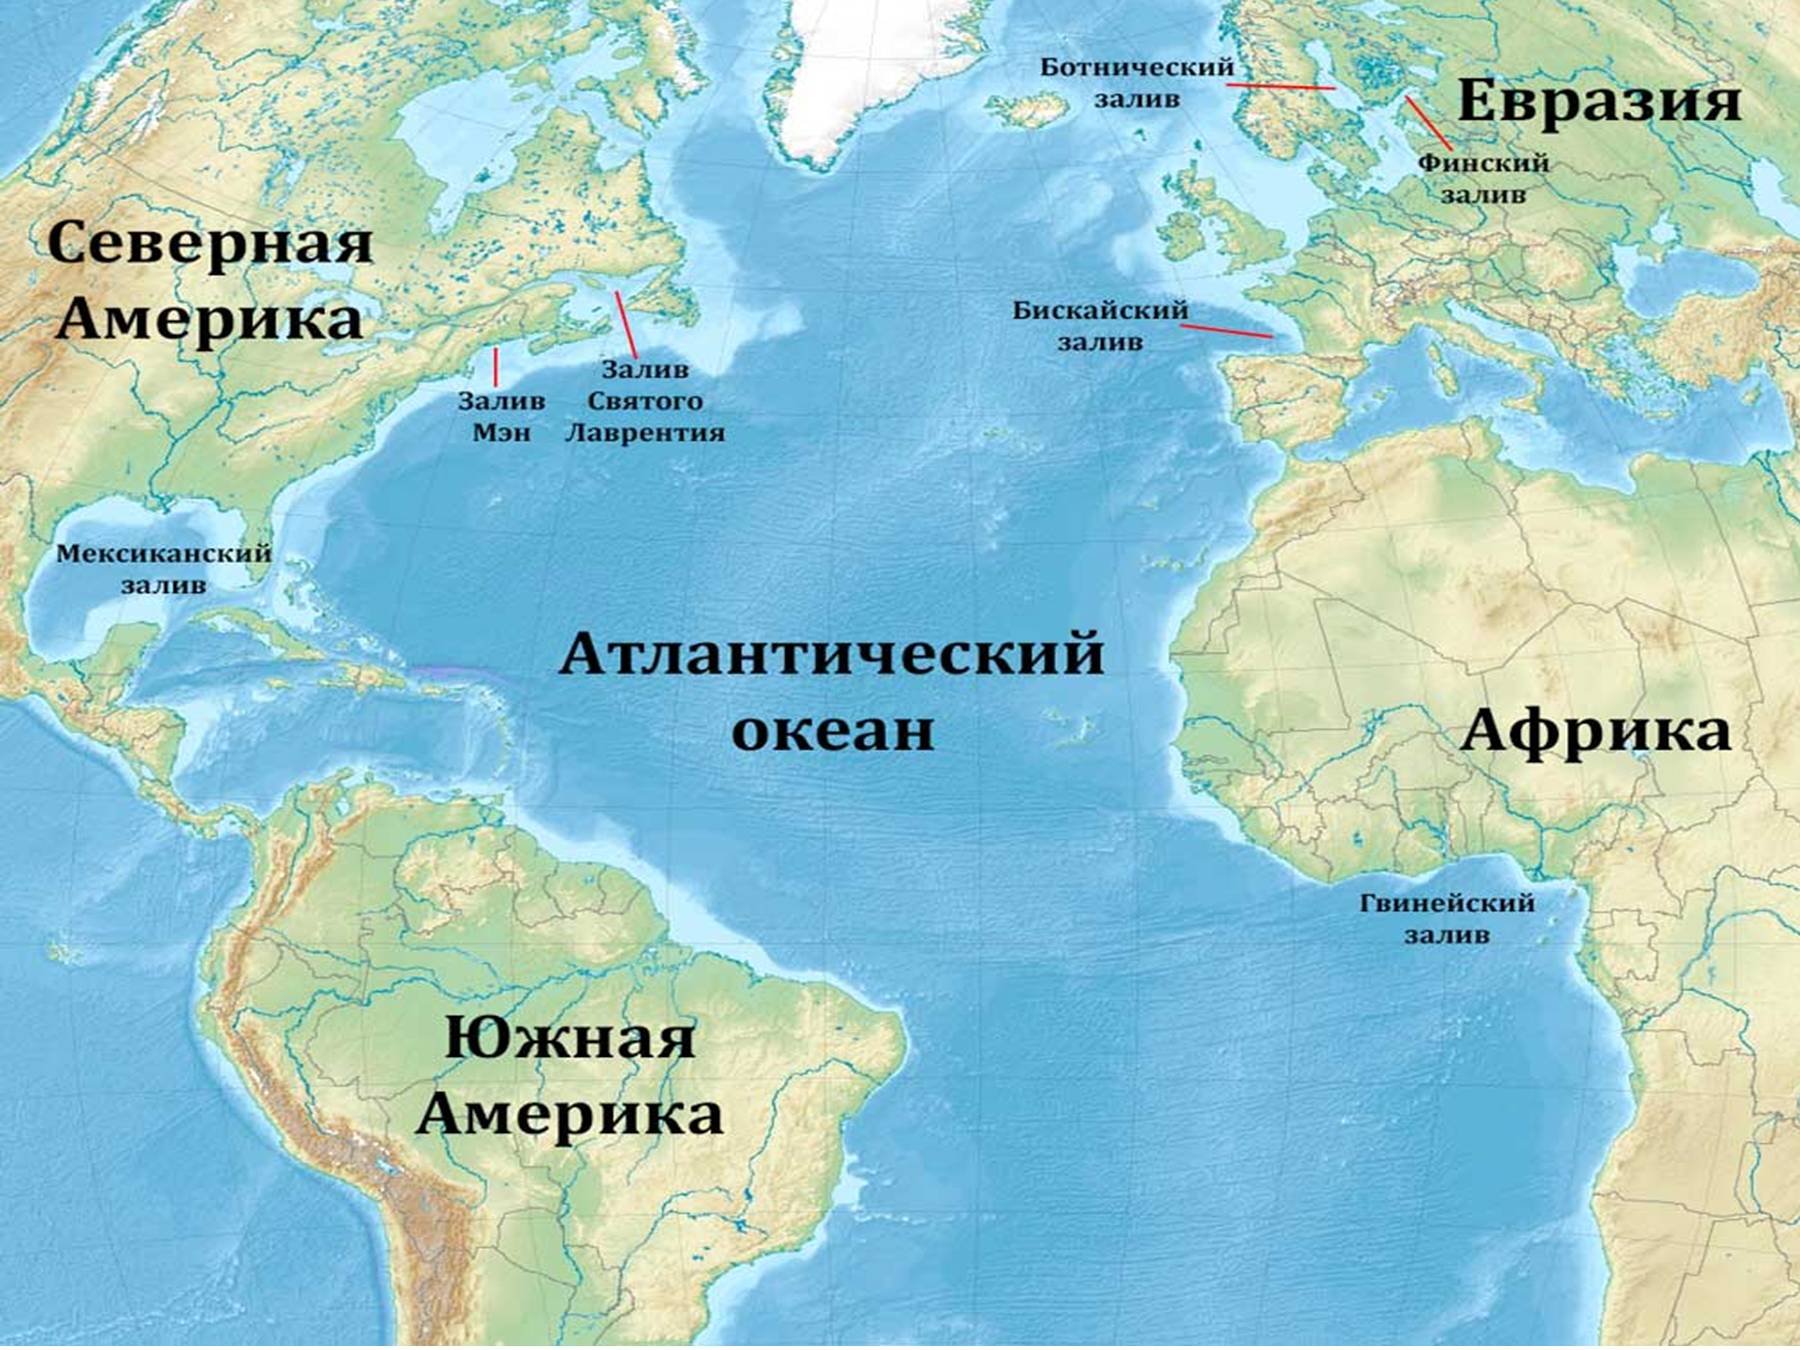 Все моря. Атлантический океан на карте. Карта Атлантического океана с морями заливами и проливами. Атлантический акеан на карте. Атлантическийокеант на карт.